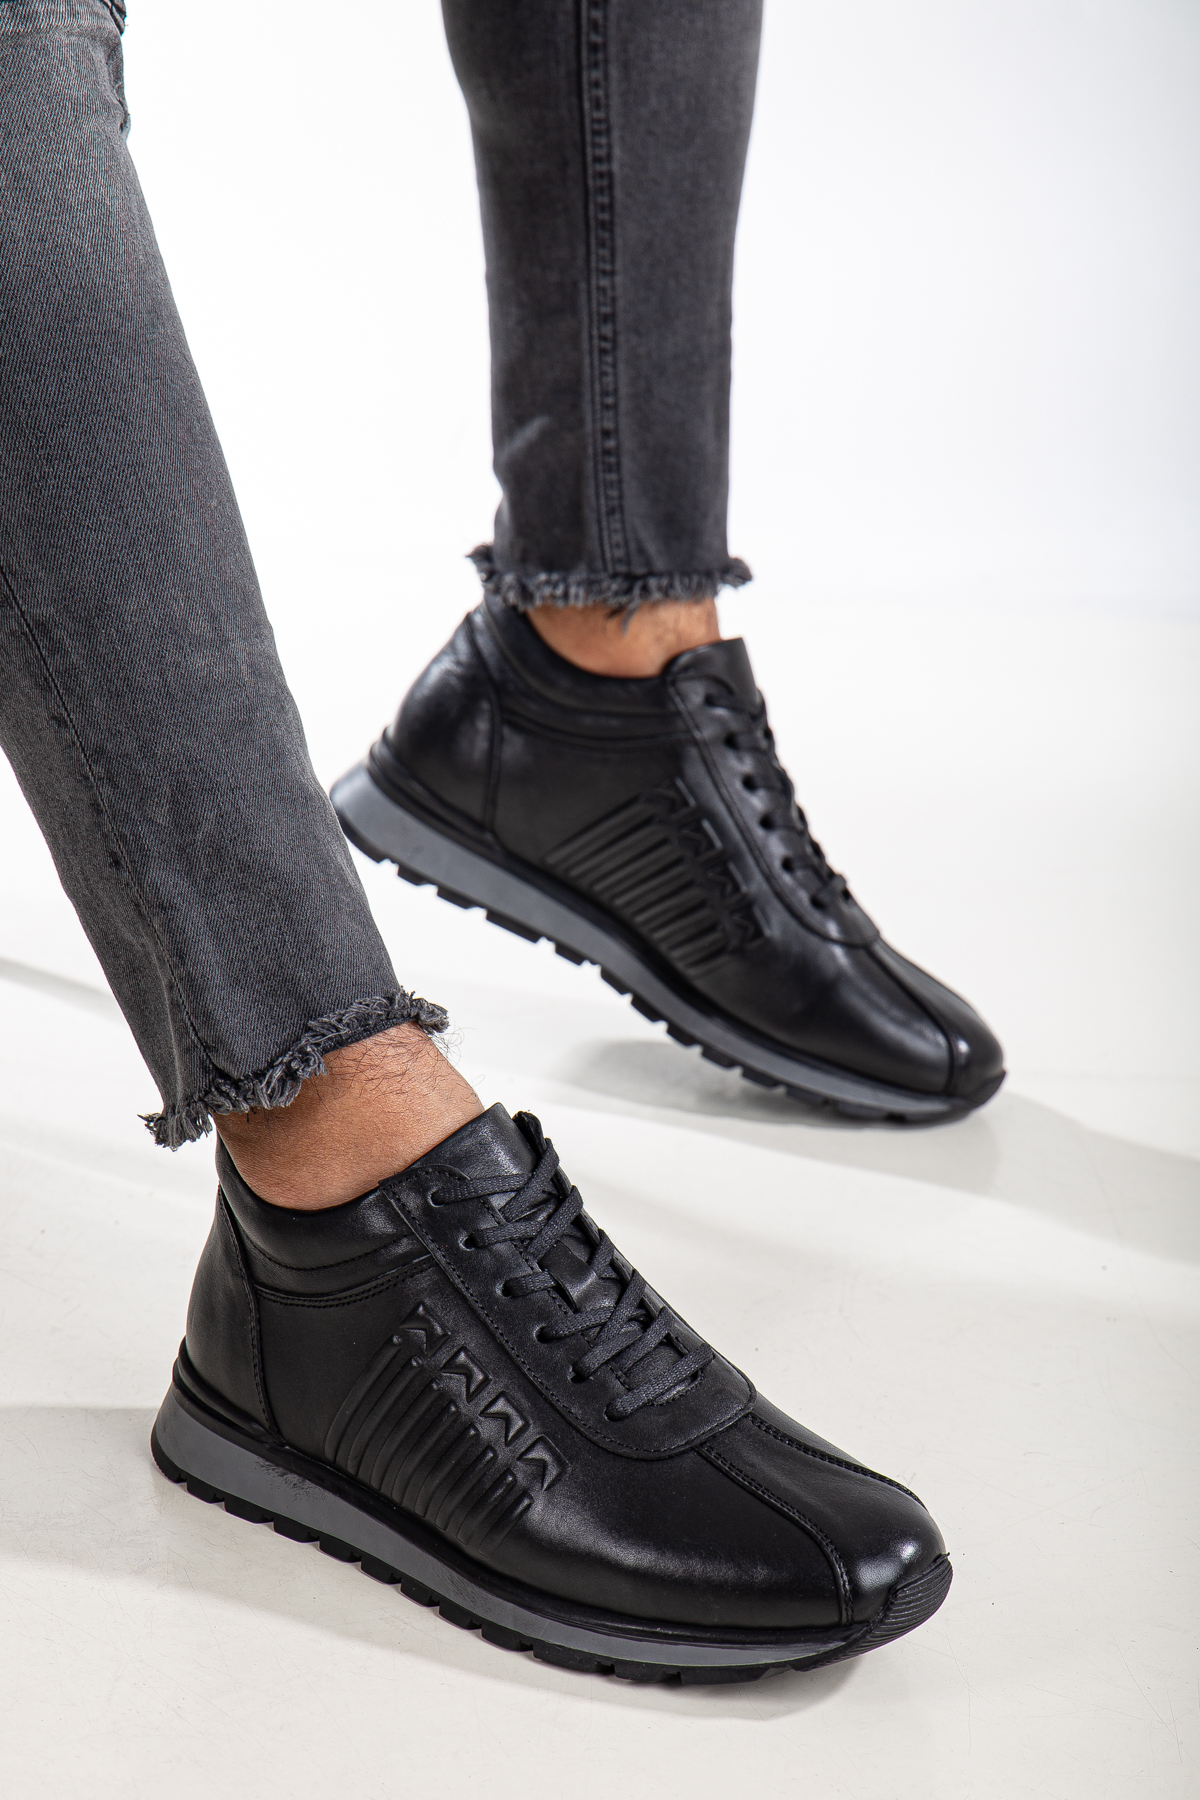 Erkek Hakiki Deri Sneakers Ayakkabı Siyah